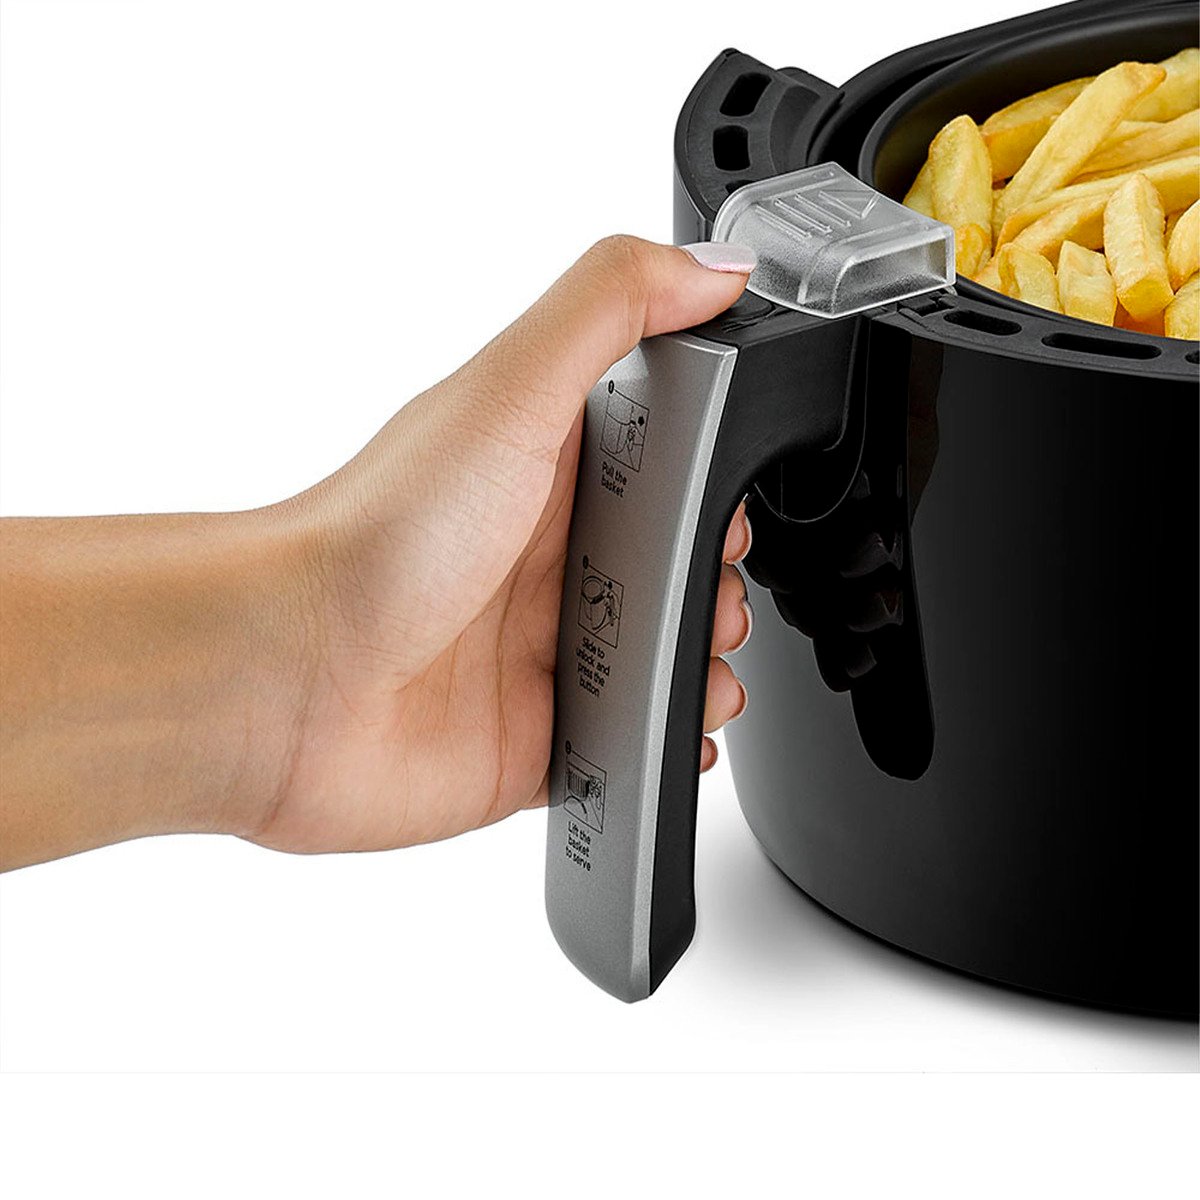 Black+Decker Air Fryer, 5.5 L, Black, AF5539-B5 Online at Best Price, Health Fryers